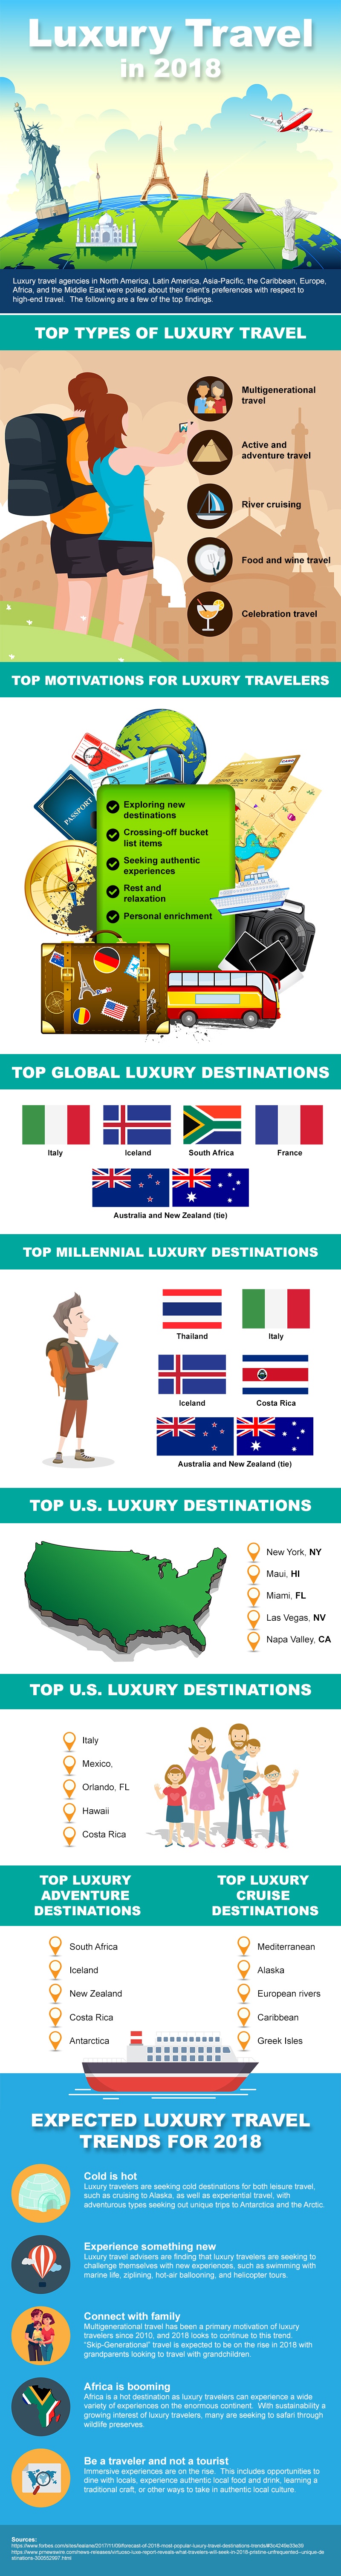 Luxury Travel Trends Infographic v2.jpeg